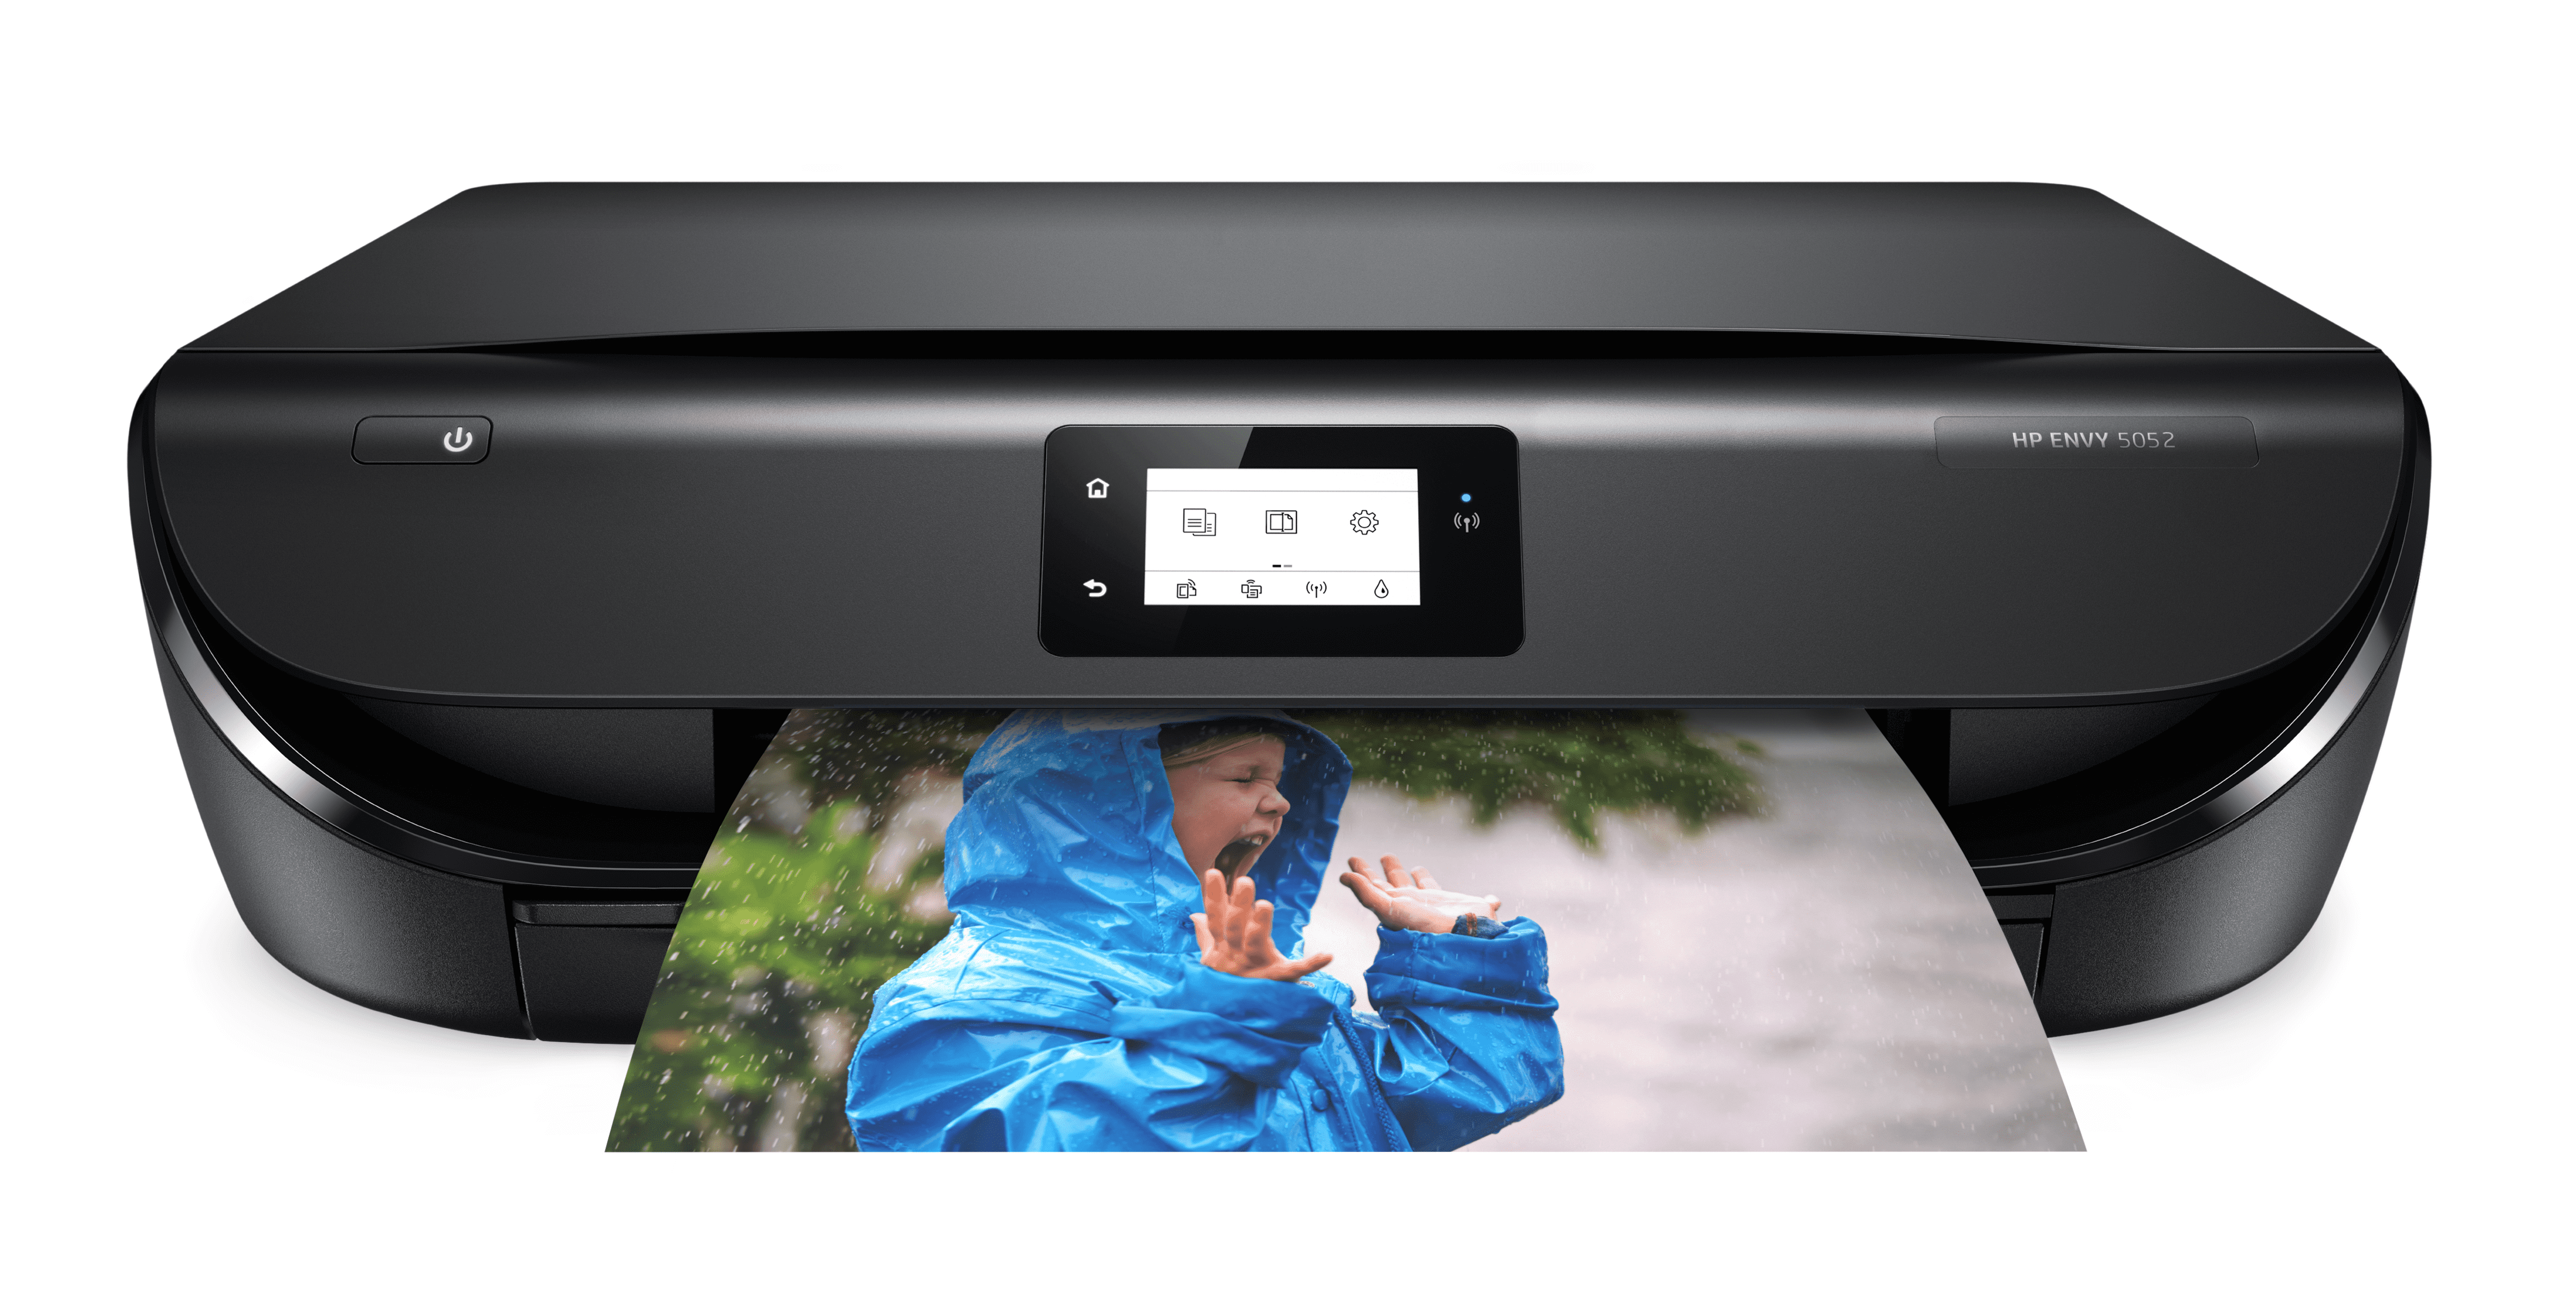 Hp envy 4500 e-all-in-one printer manual